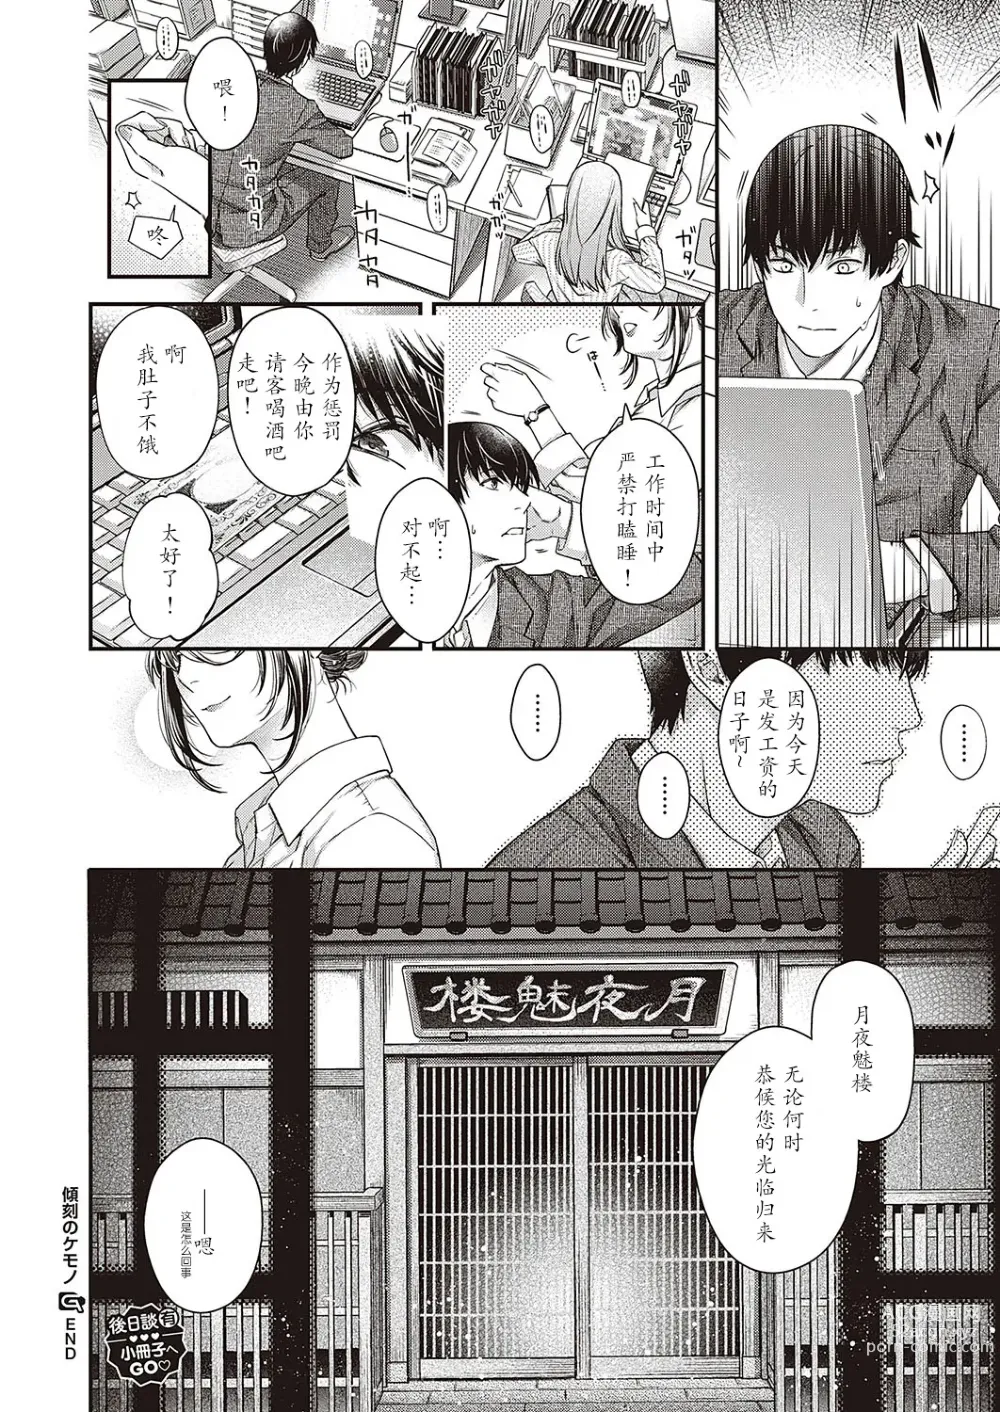 Page 16 of manga Keikoku no Kemono